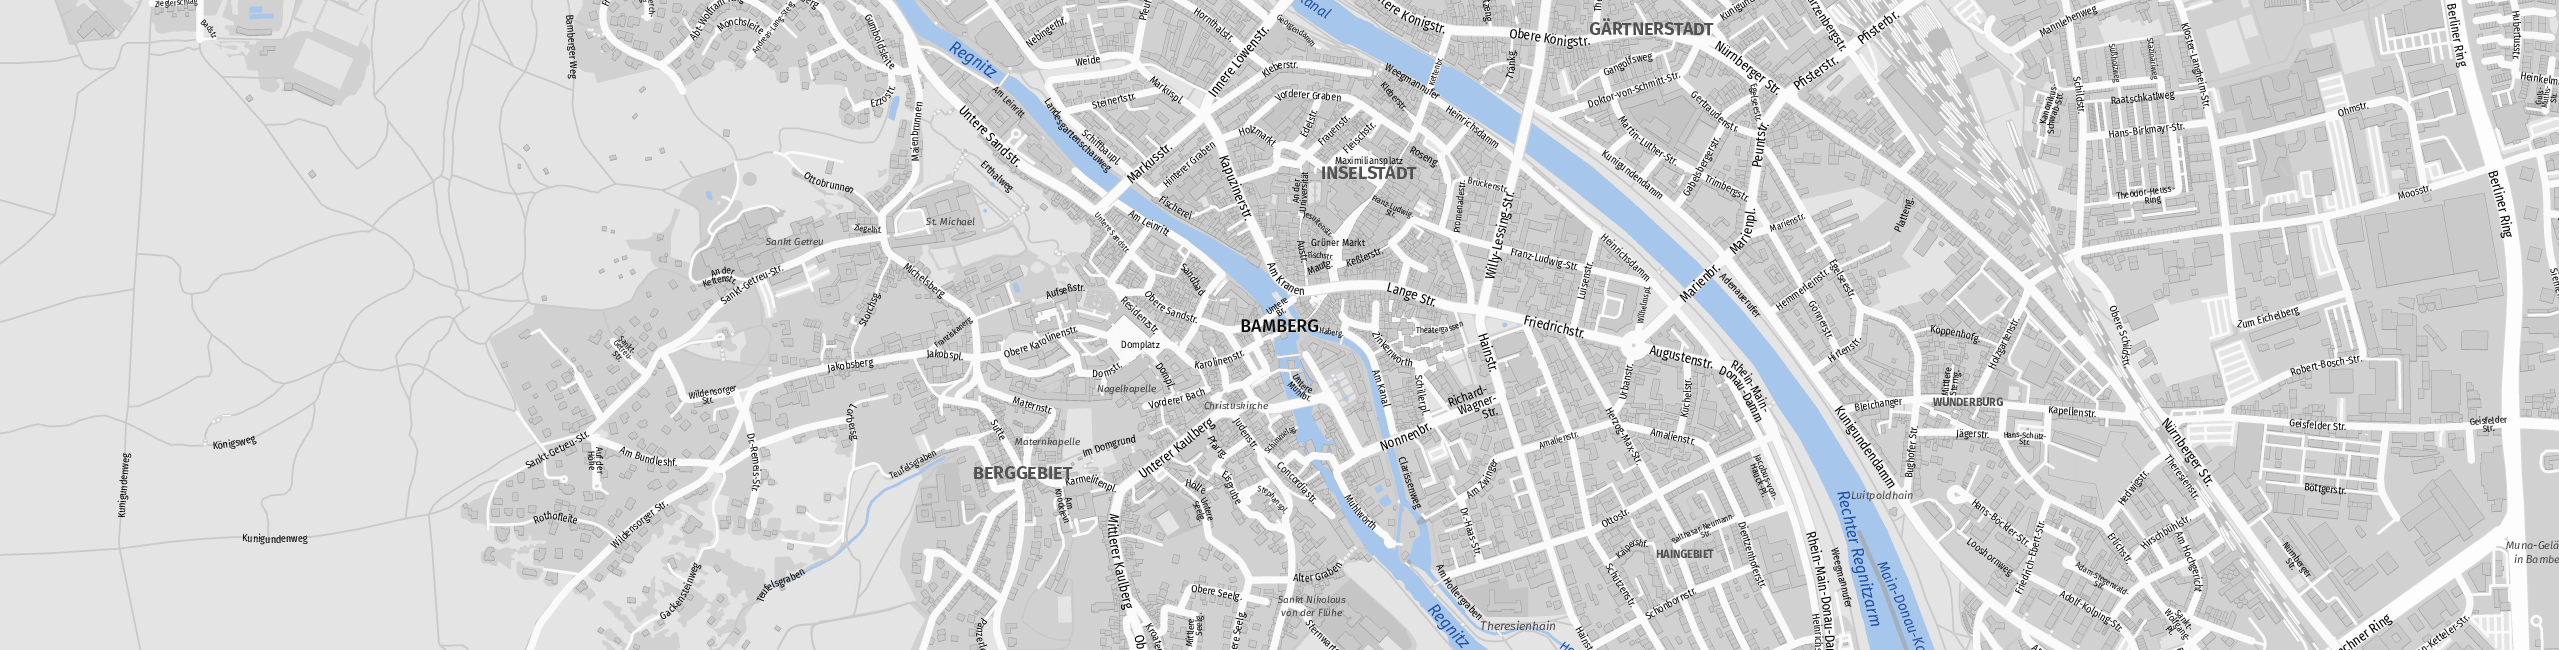 Stadtplan Bamberg zum Downloaden.